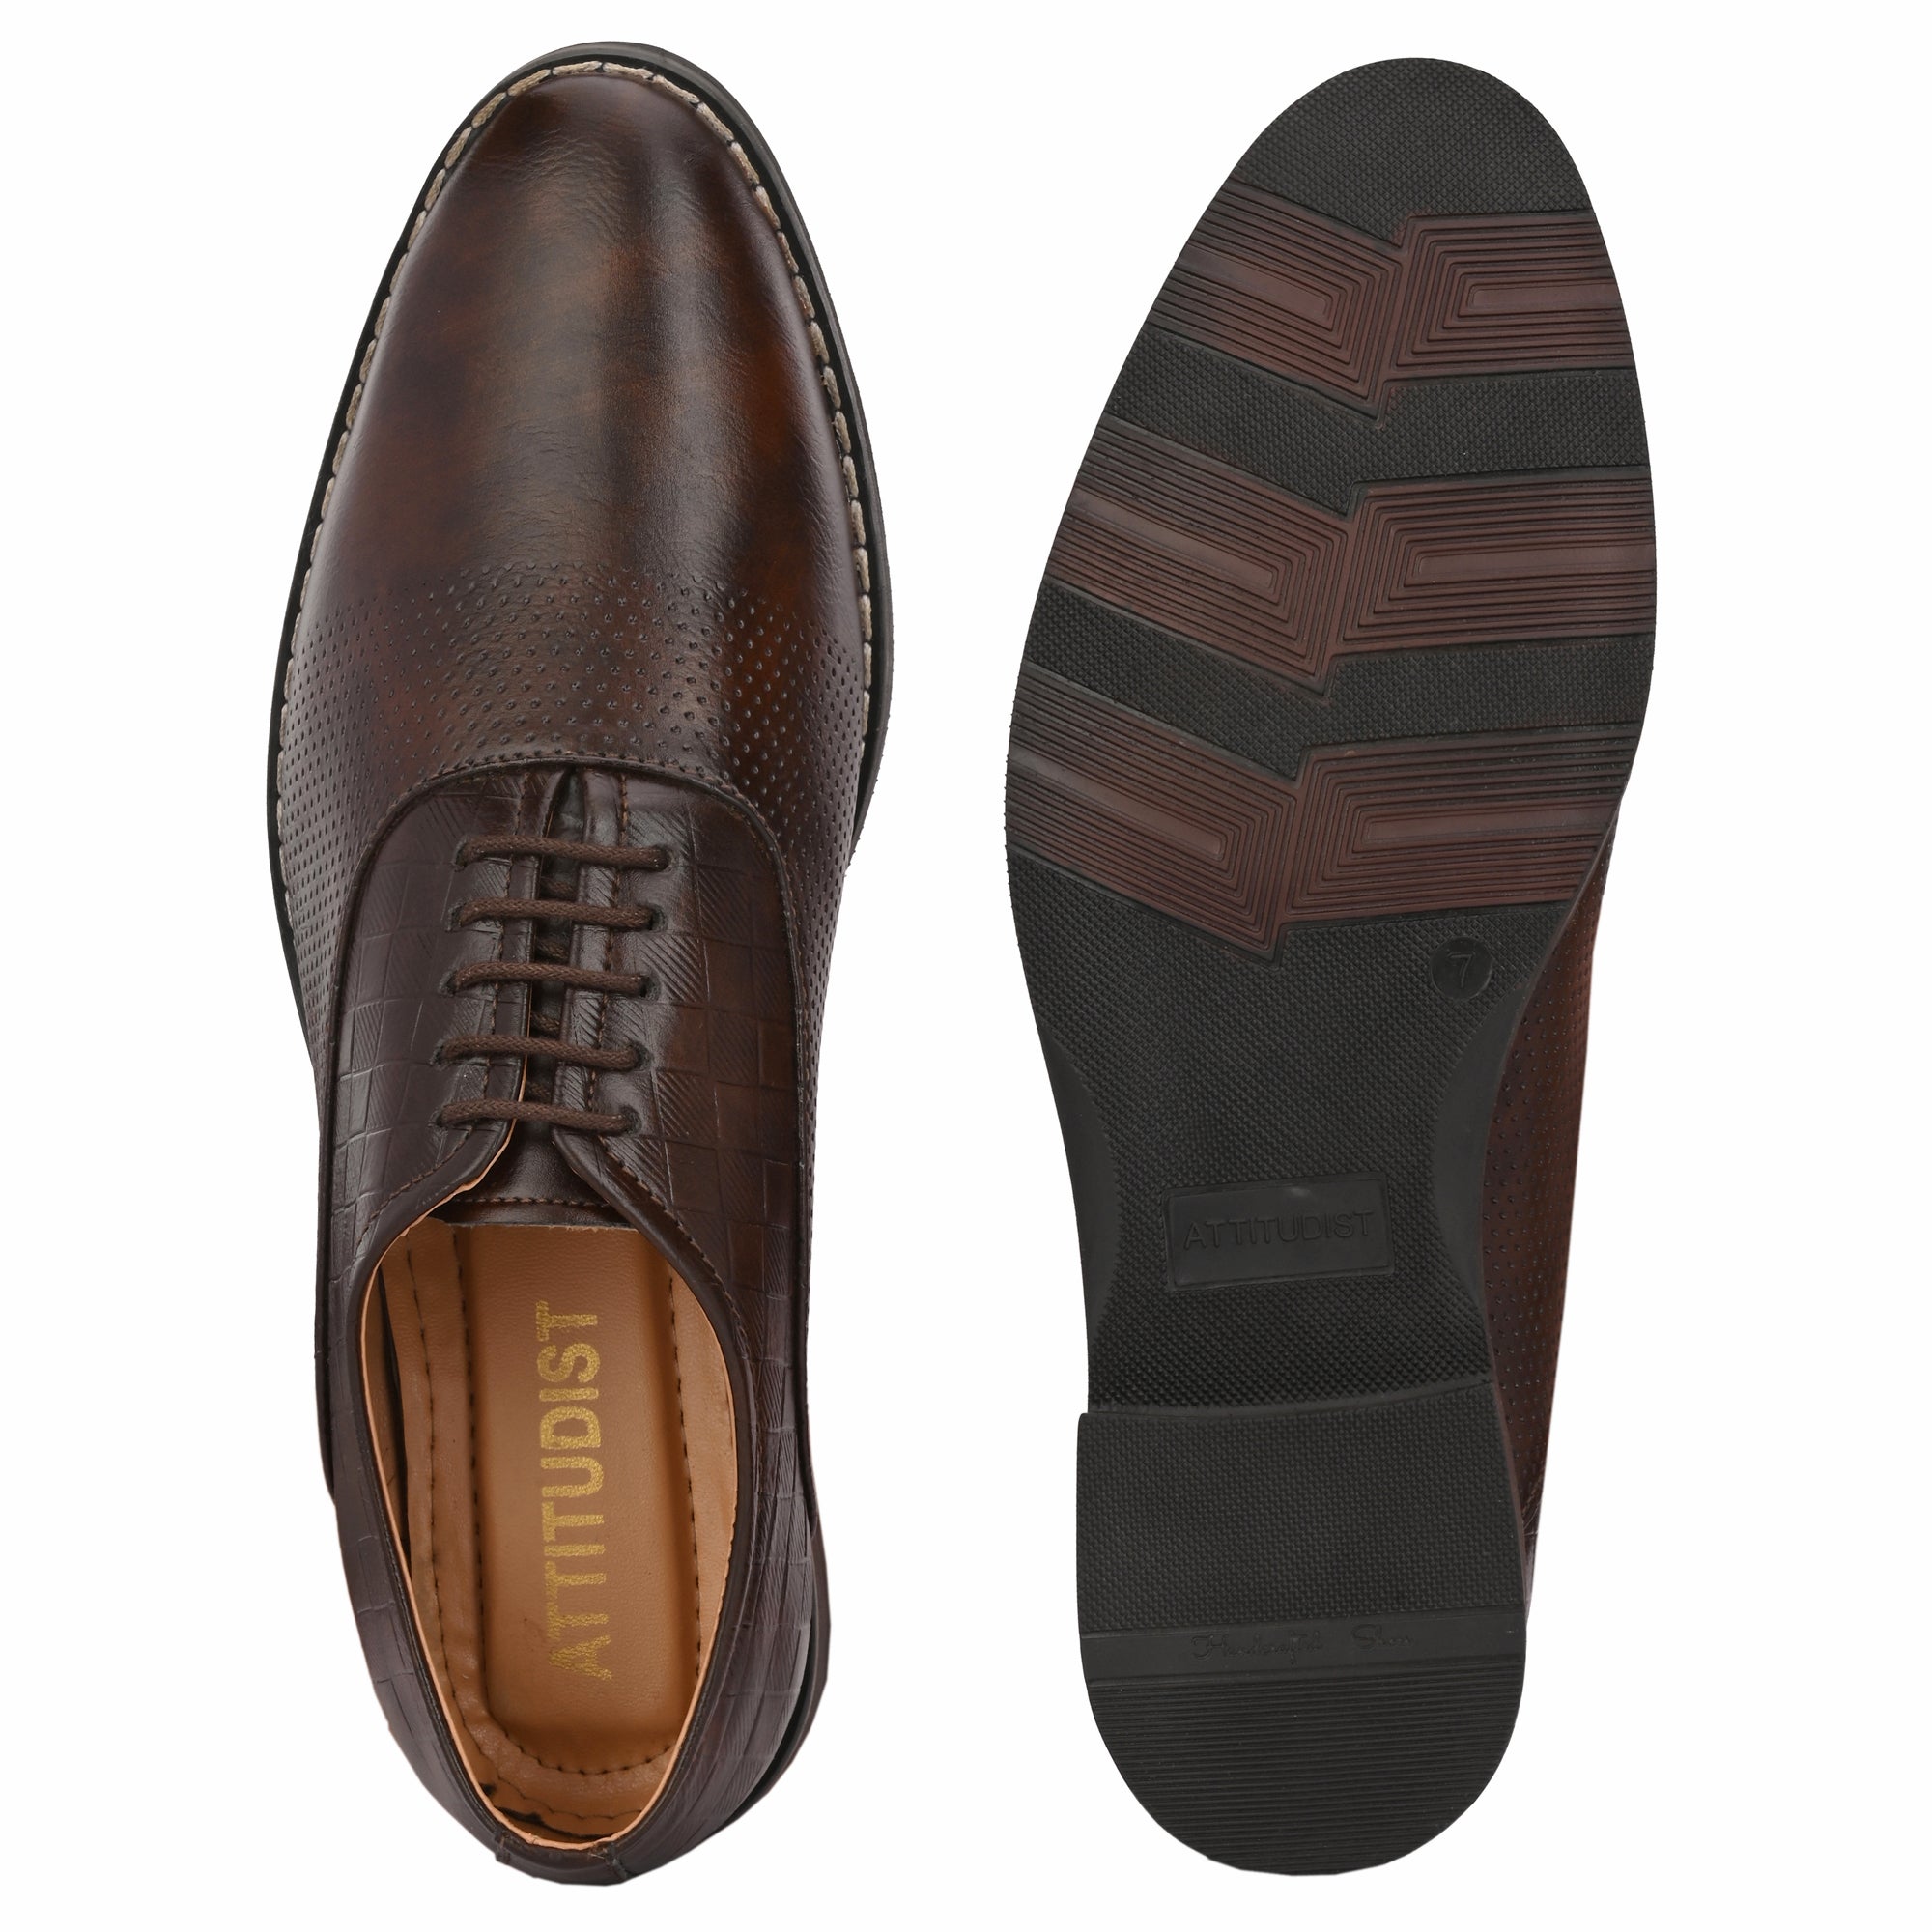 brown-formal-lace-up-attitudist-shoes-for-men-with-design-sp11b